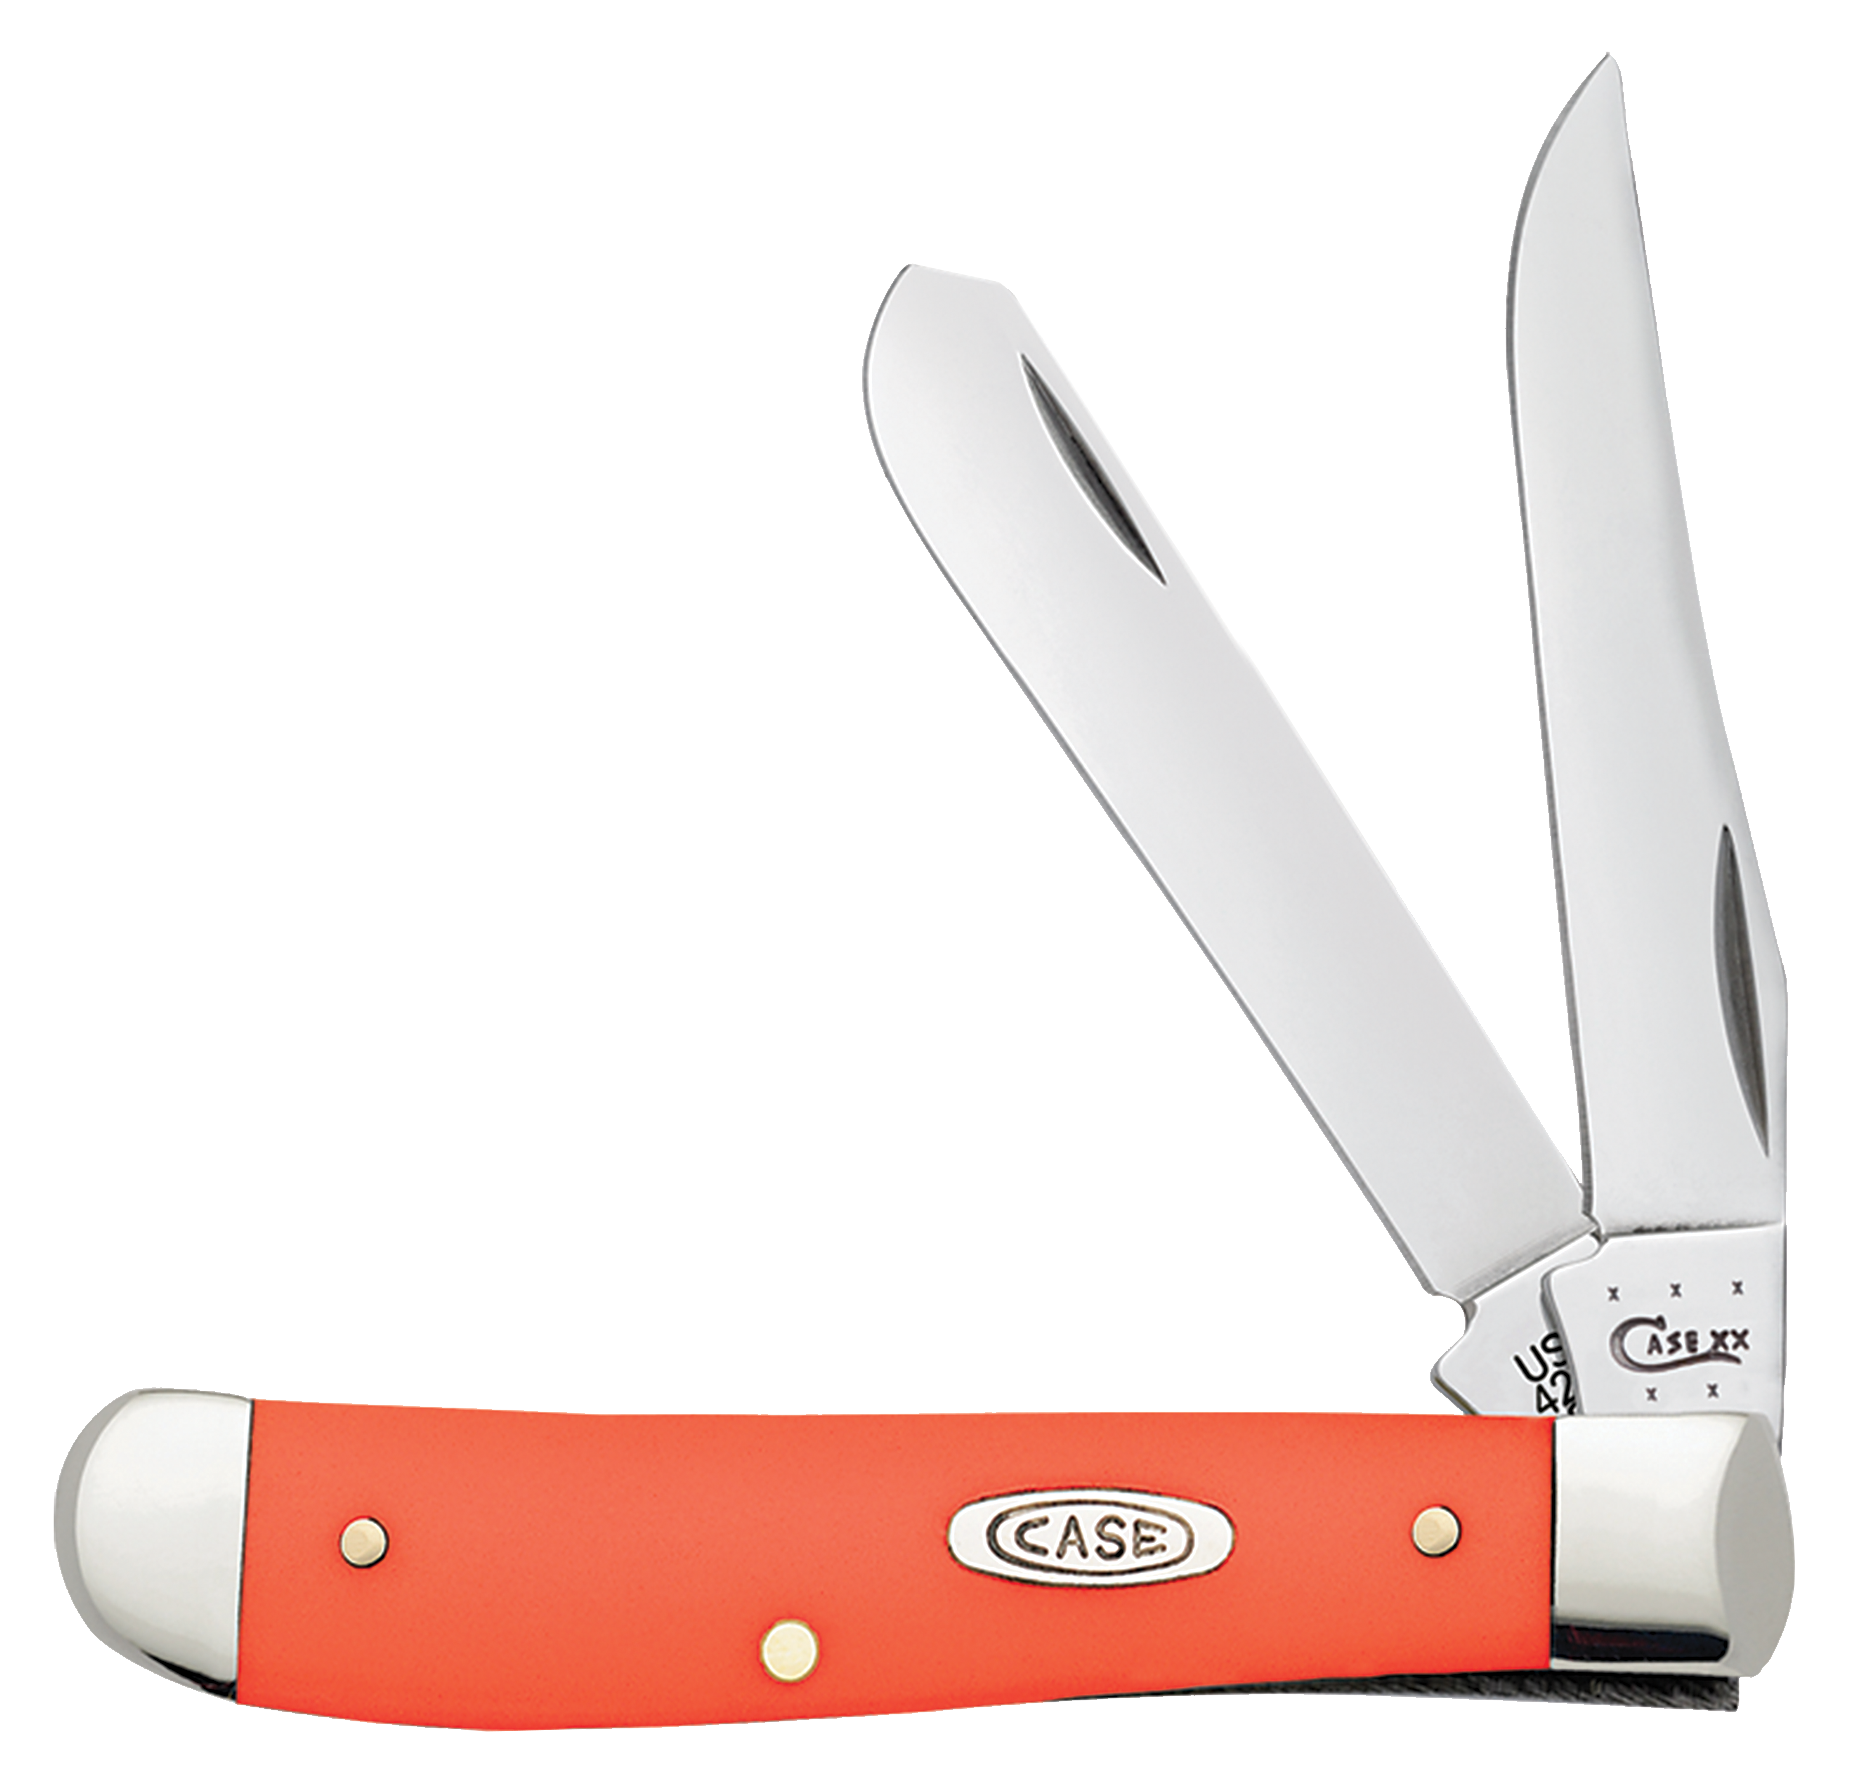 Cabela's Small Folding Knife - NACD